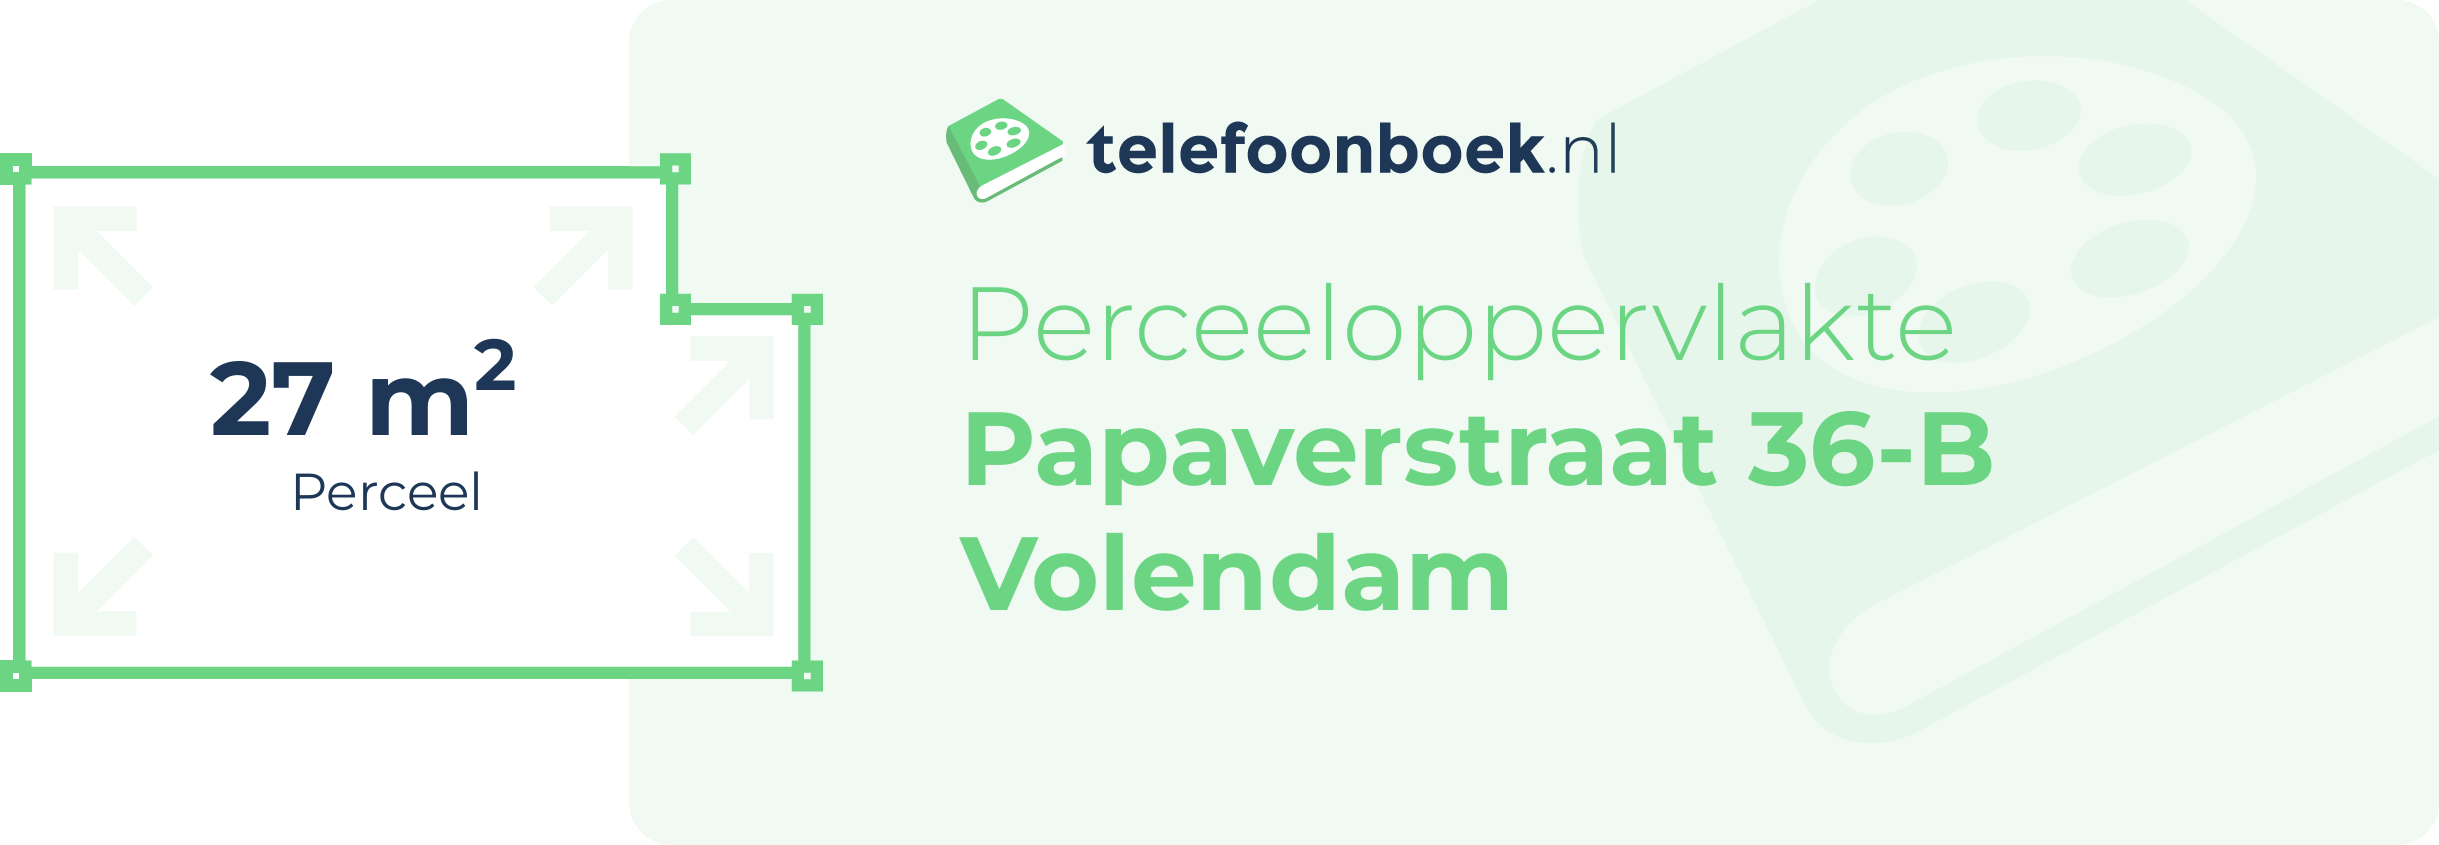 Perceeloppervlakte Papaverstraat 36-B Volendam